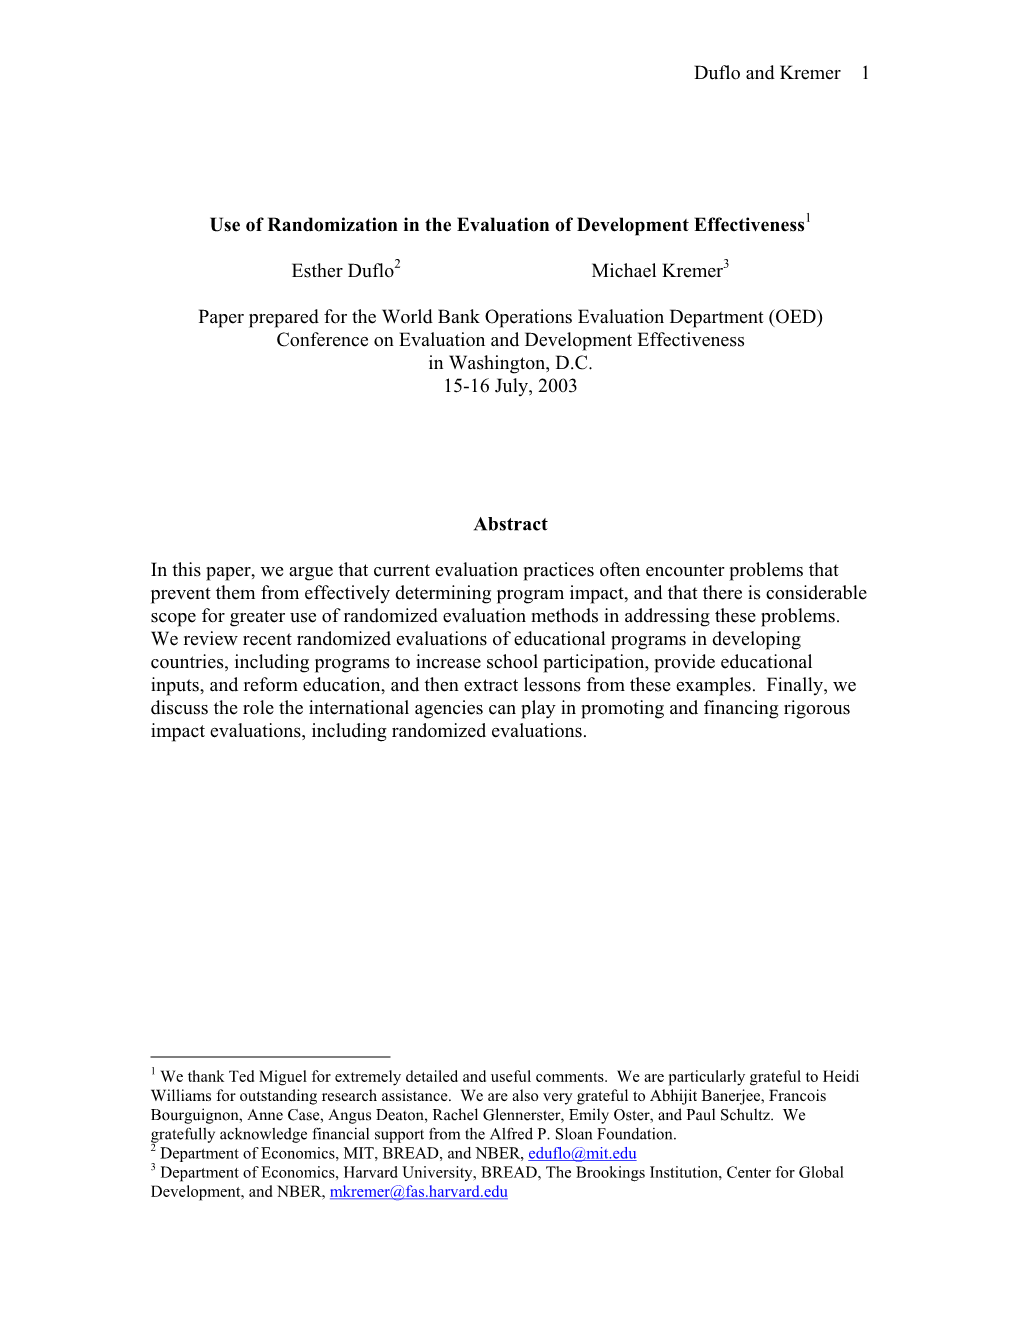 Use of Randomization in the Evaluation of Development Effectiveness1